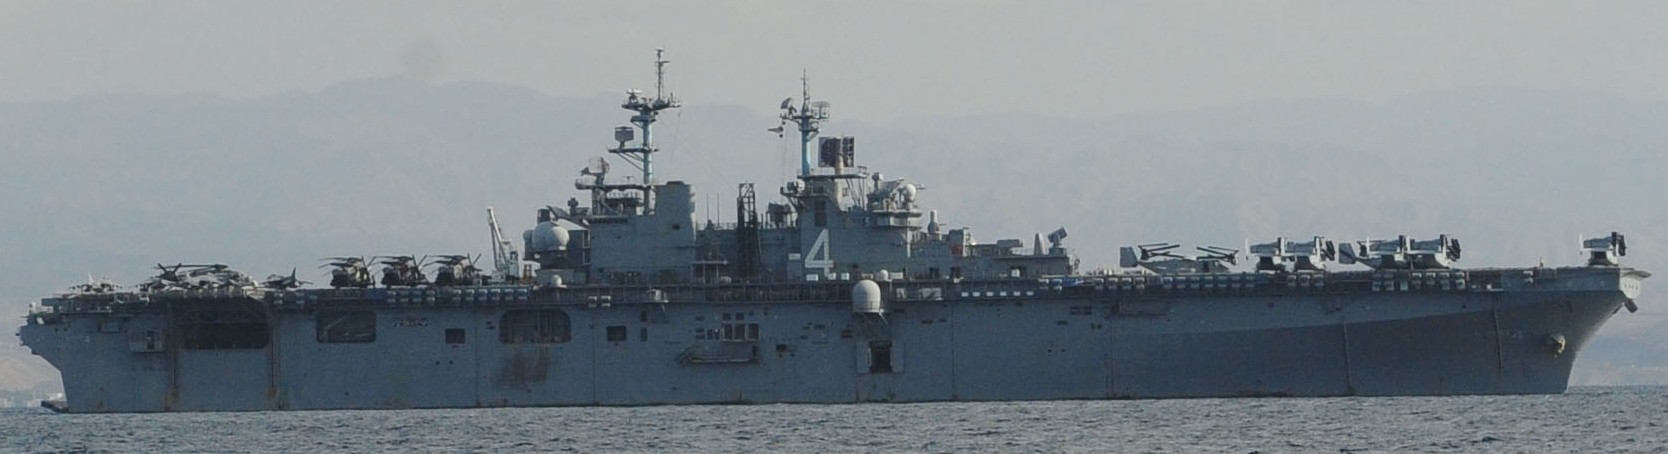 lhd-4 uss boxer wasp class amphibious assault ship dock landing us navy marines vmm-166 djibouti 86